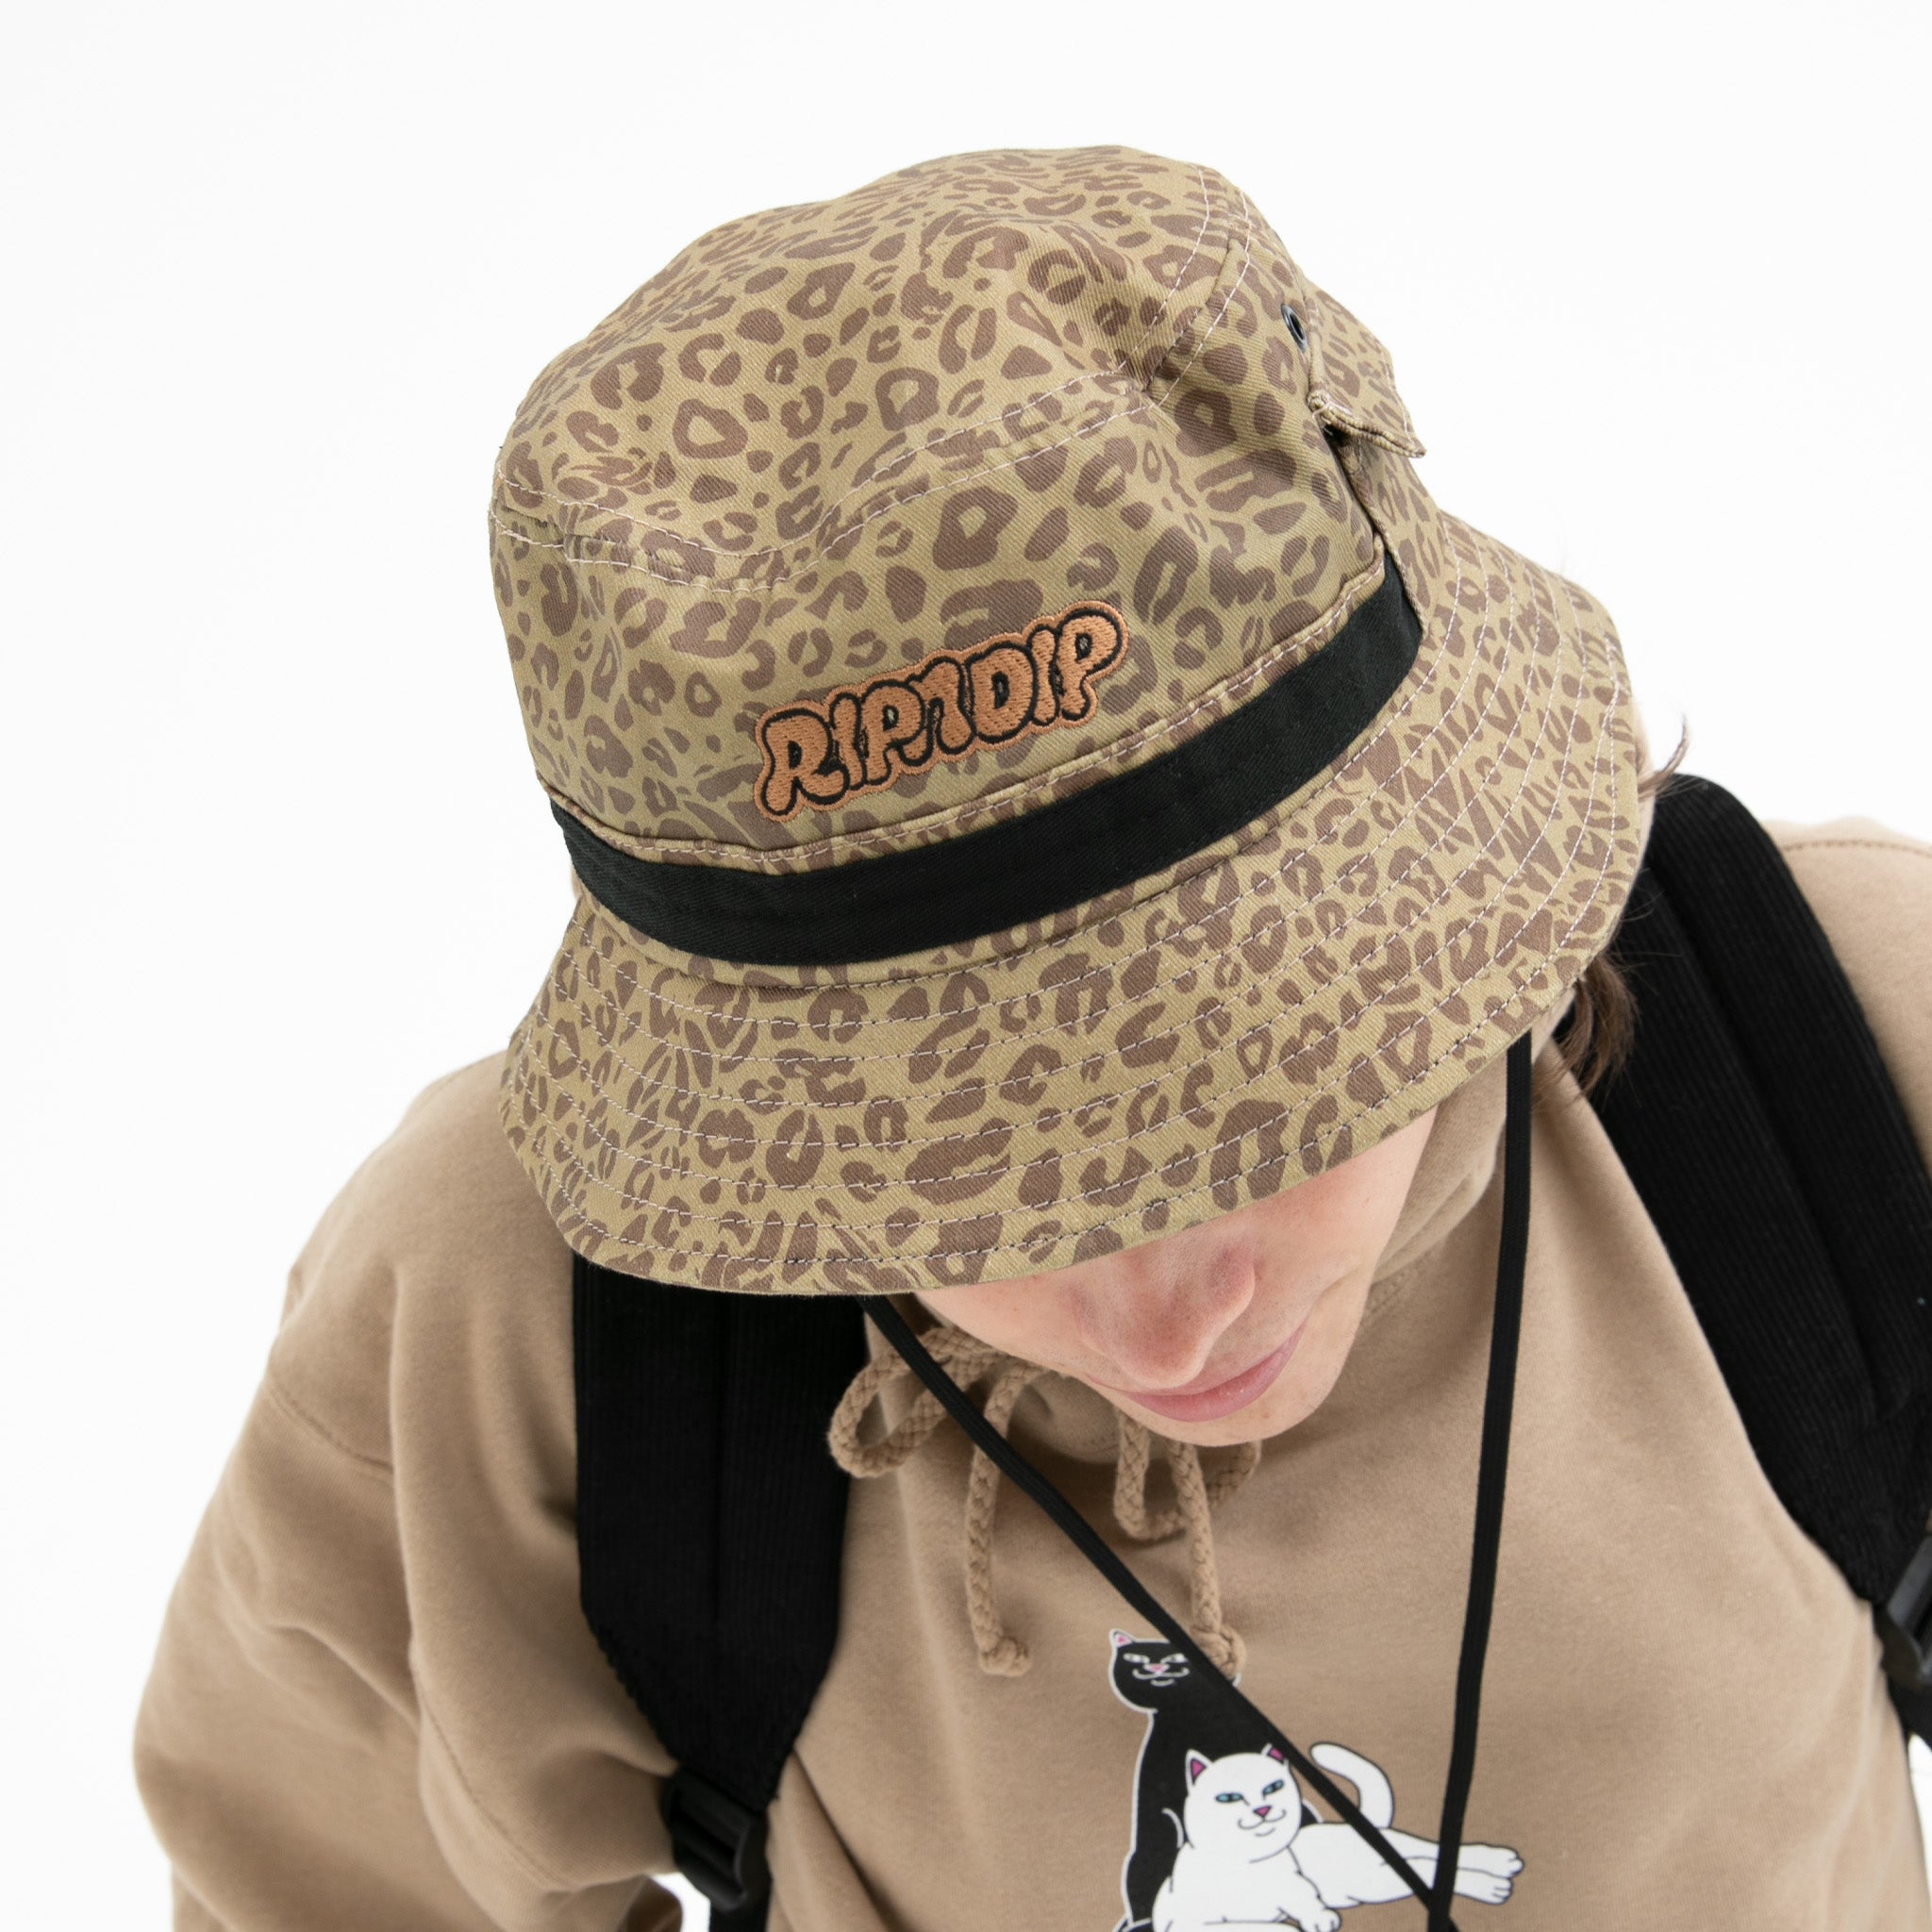 RIPNDIP Spotted Boonie Hat (Tan)